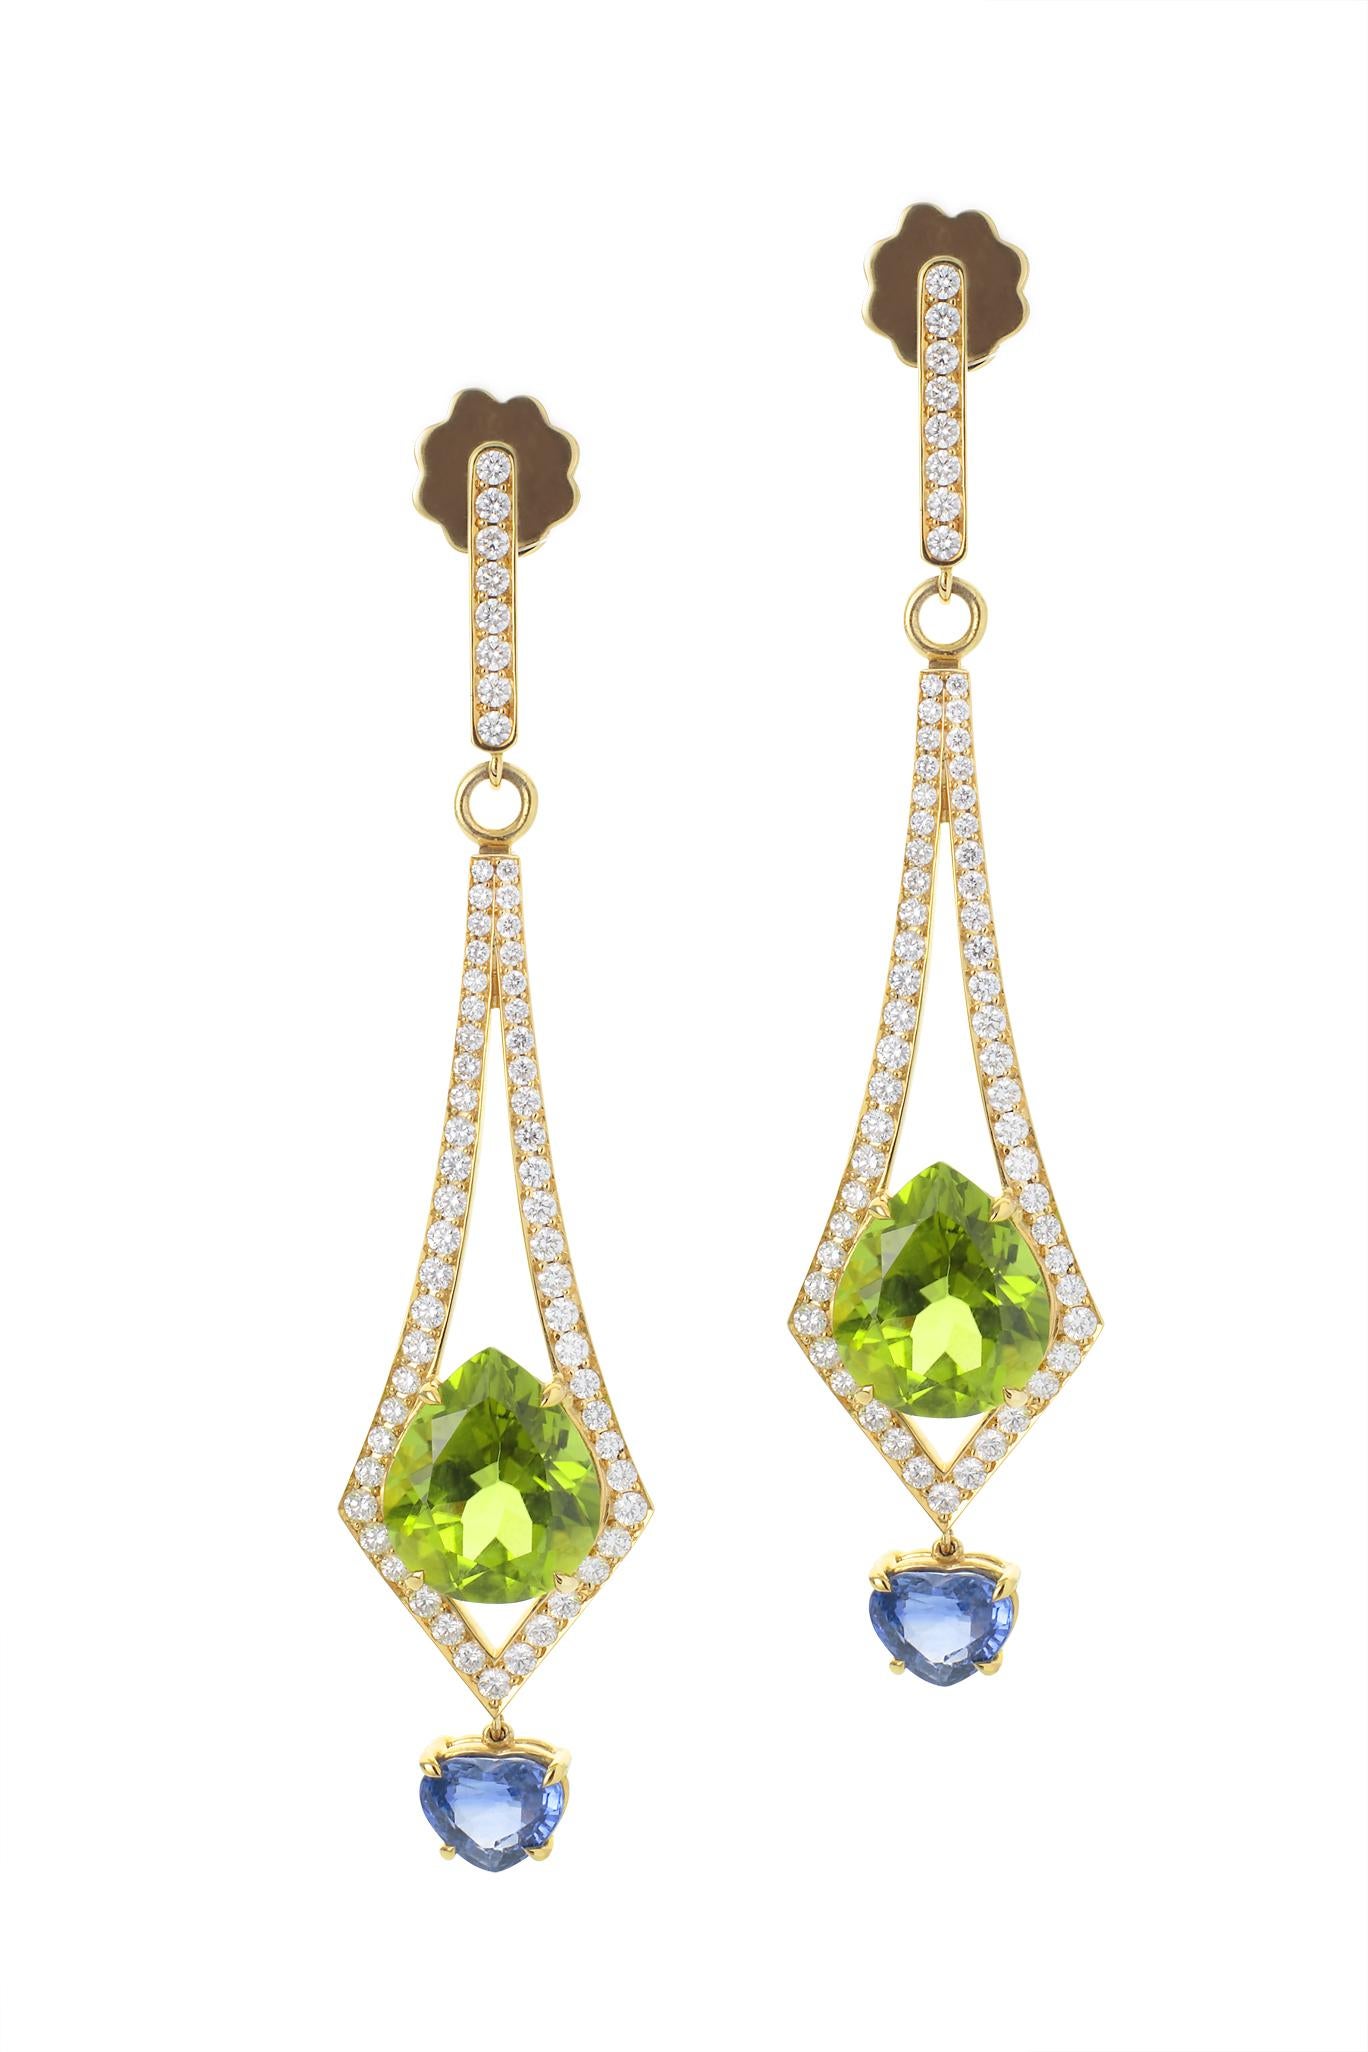 Pear Cut 8.57 Carat Peridot and 2.26 Carat Blue Sapphire and Diamond Earrings in 18K Gold